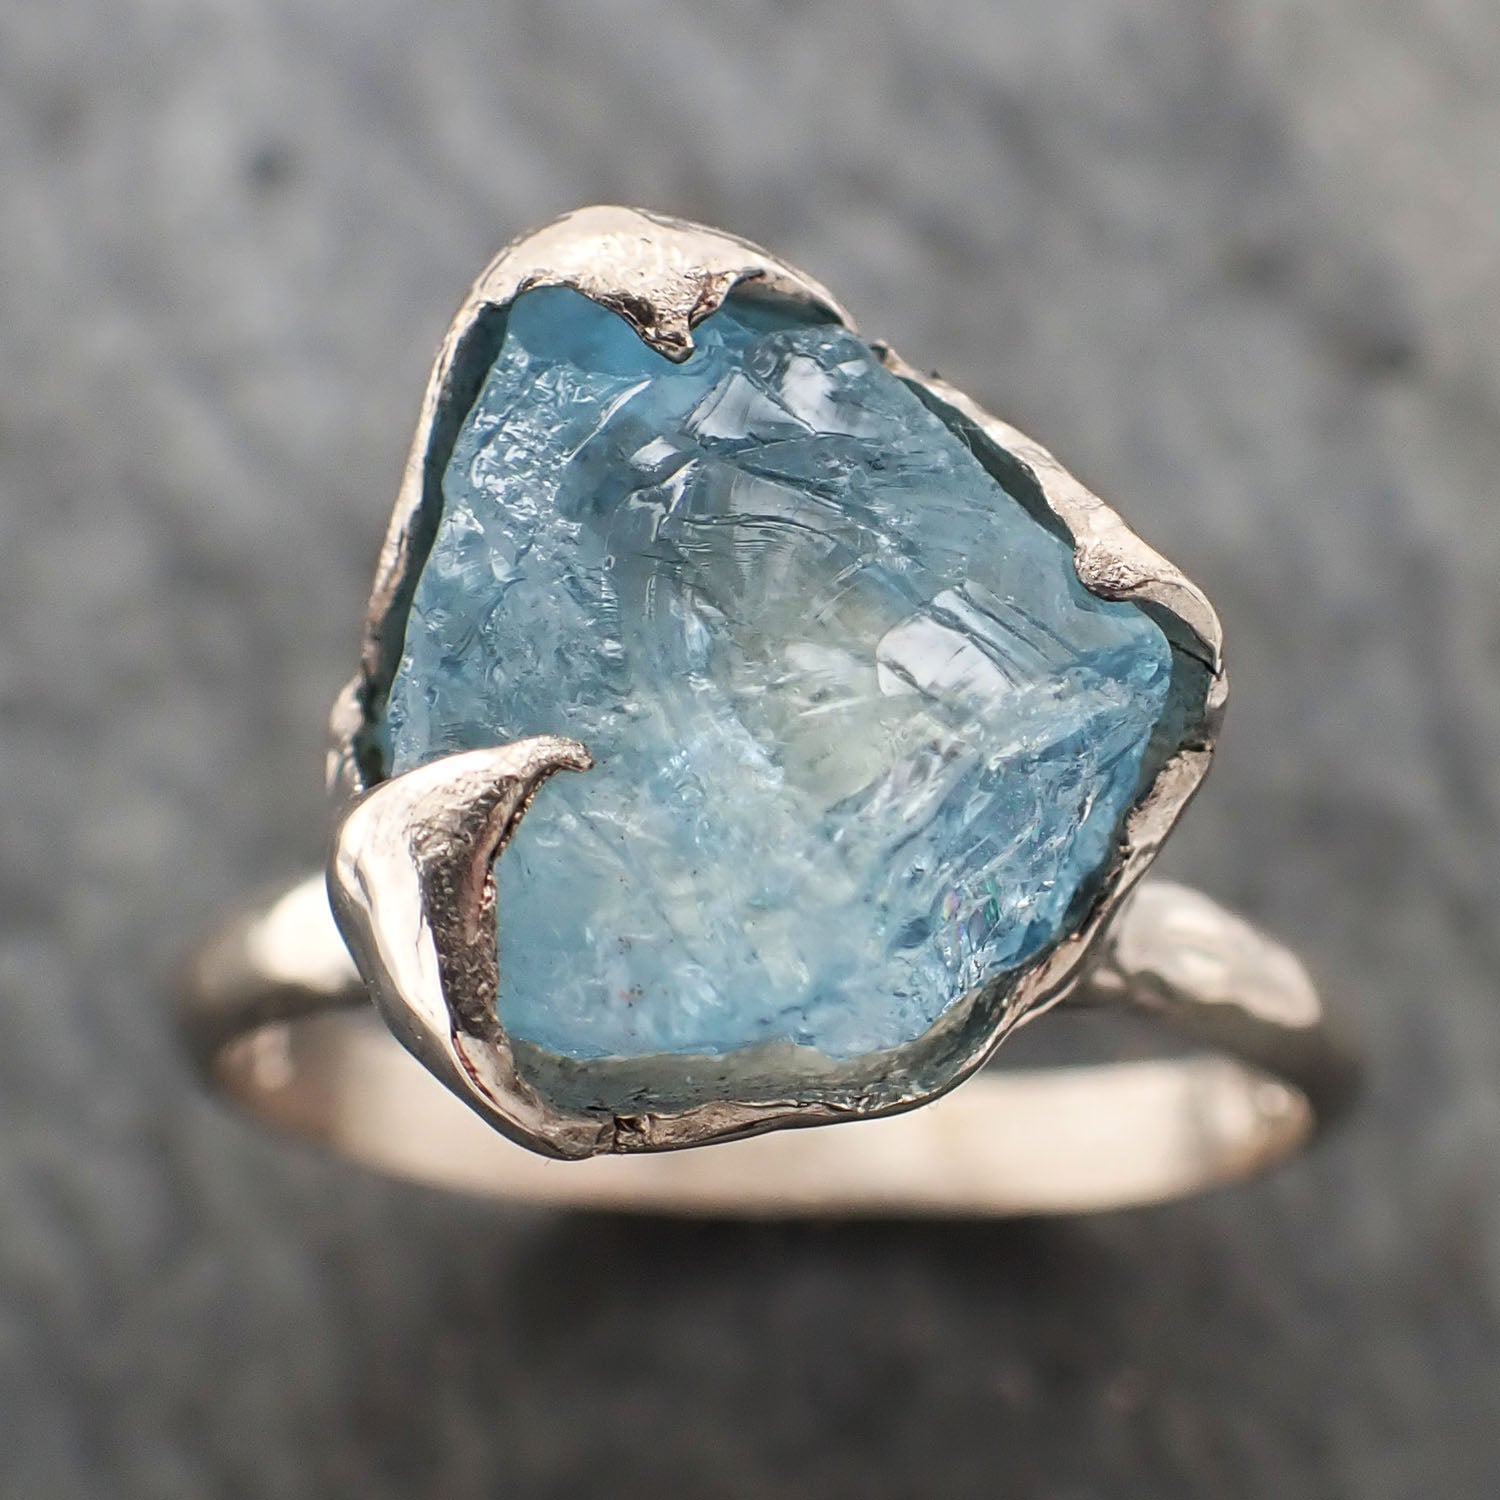 raw uncut aquamarine solitaire white gold ring custom one of a kind gemstone ring bespoke byangeline 2321 Alternative Engagement